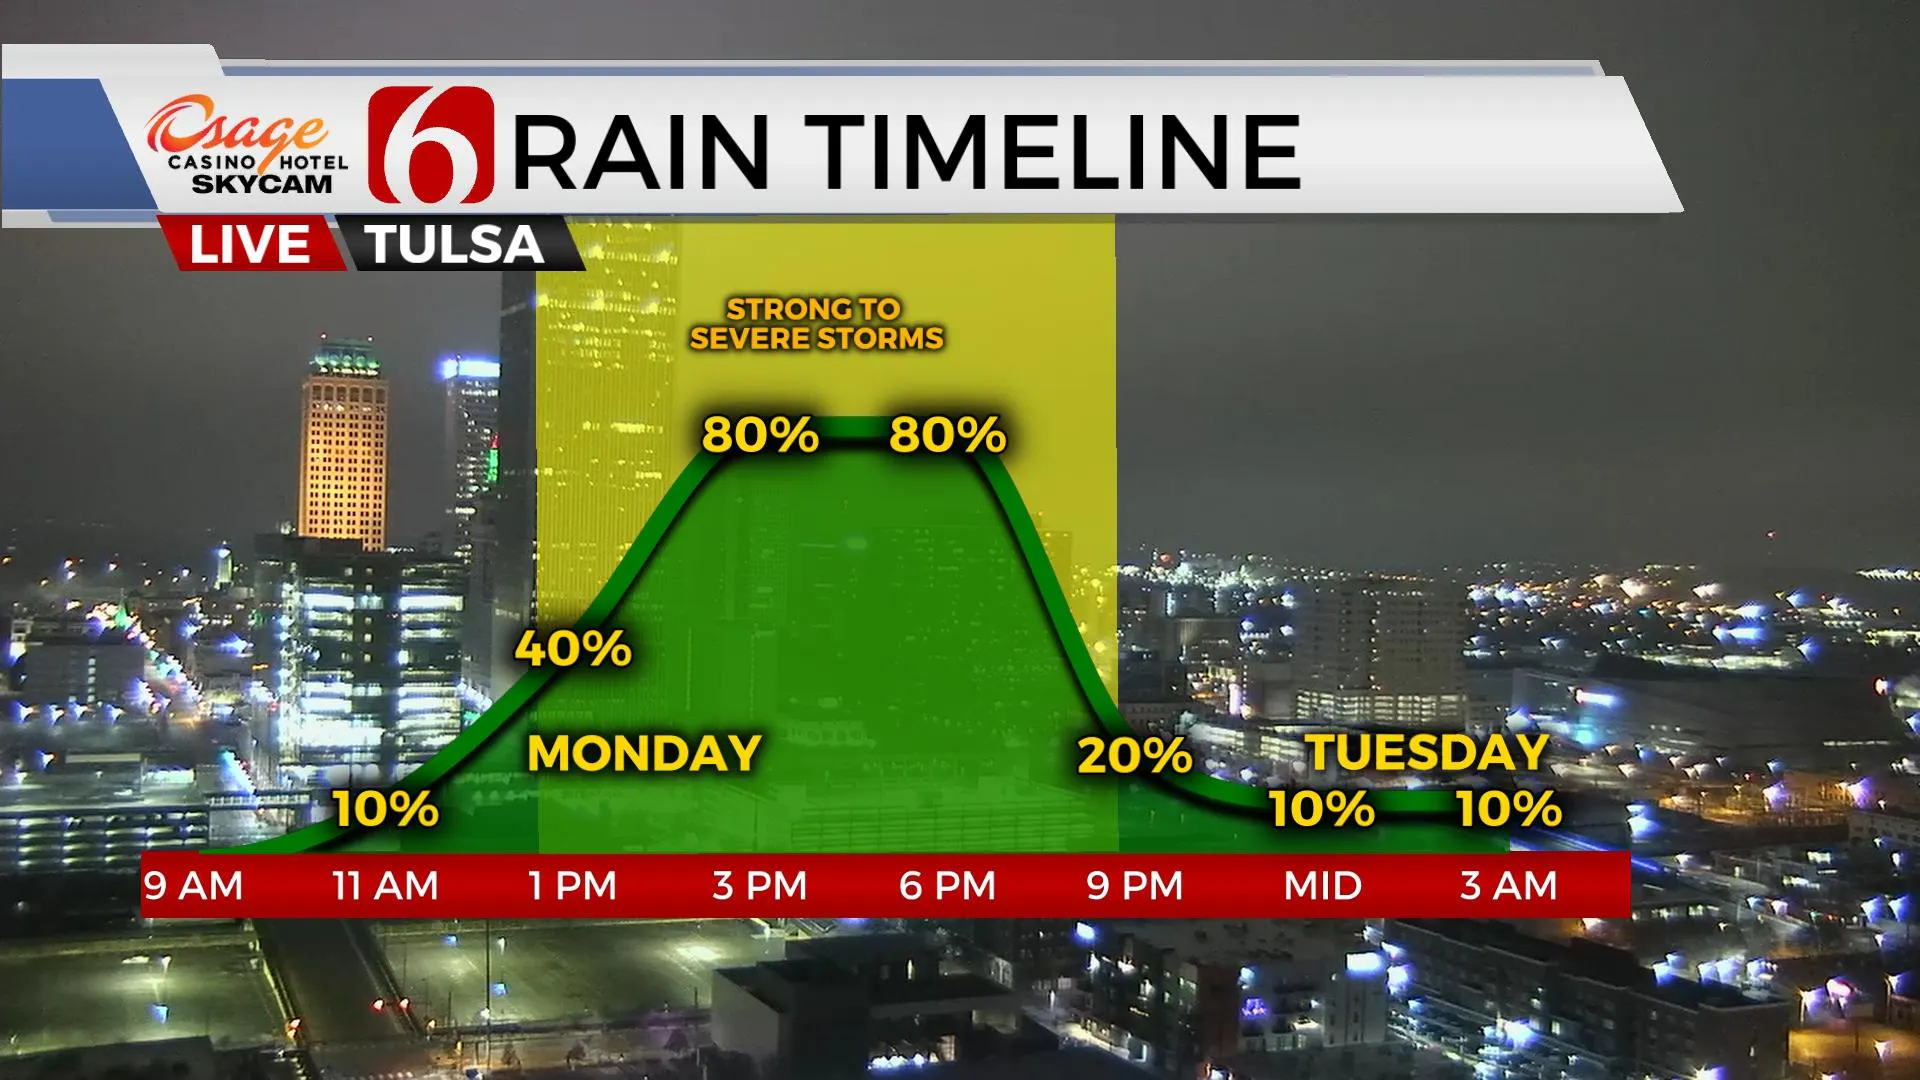 Rain timeline for Monday.